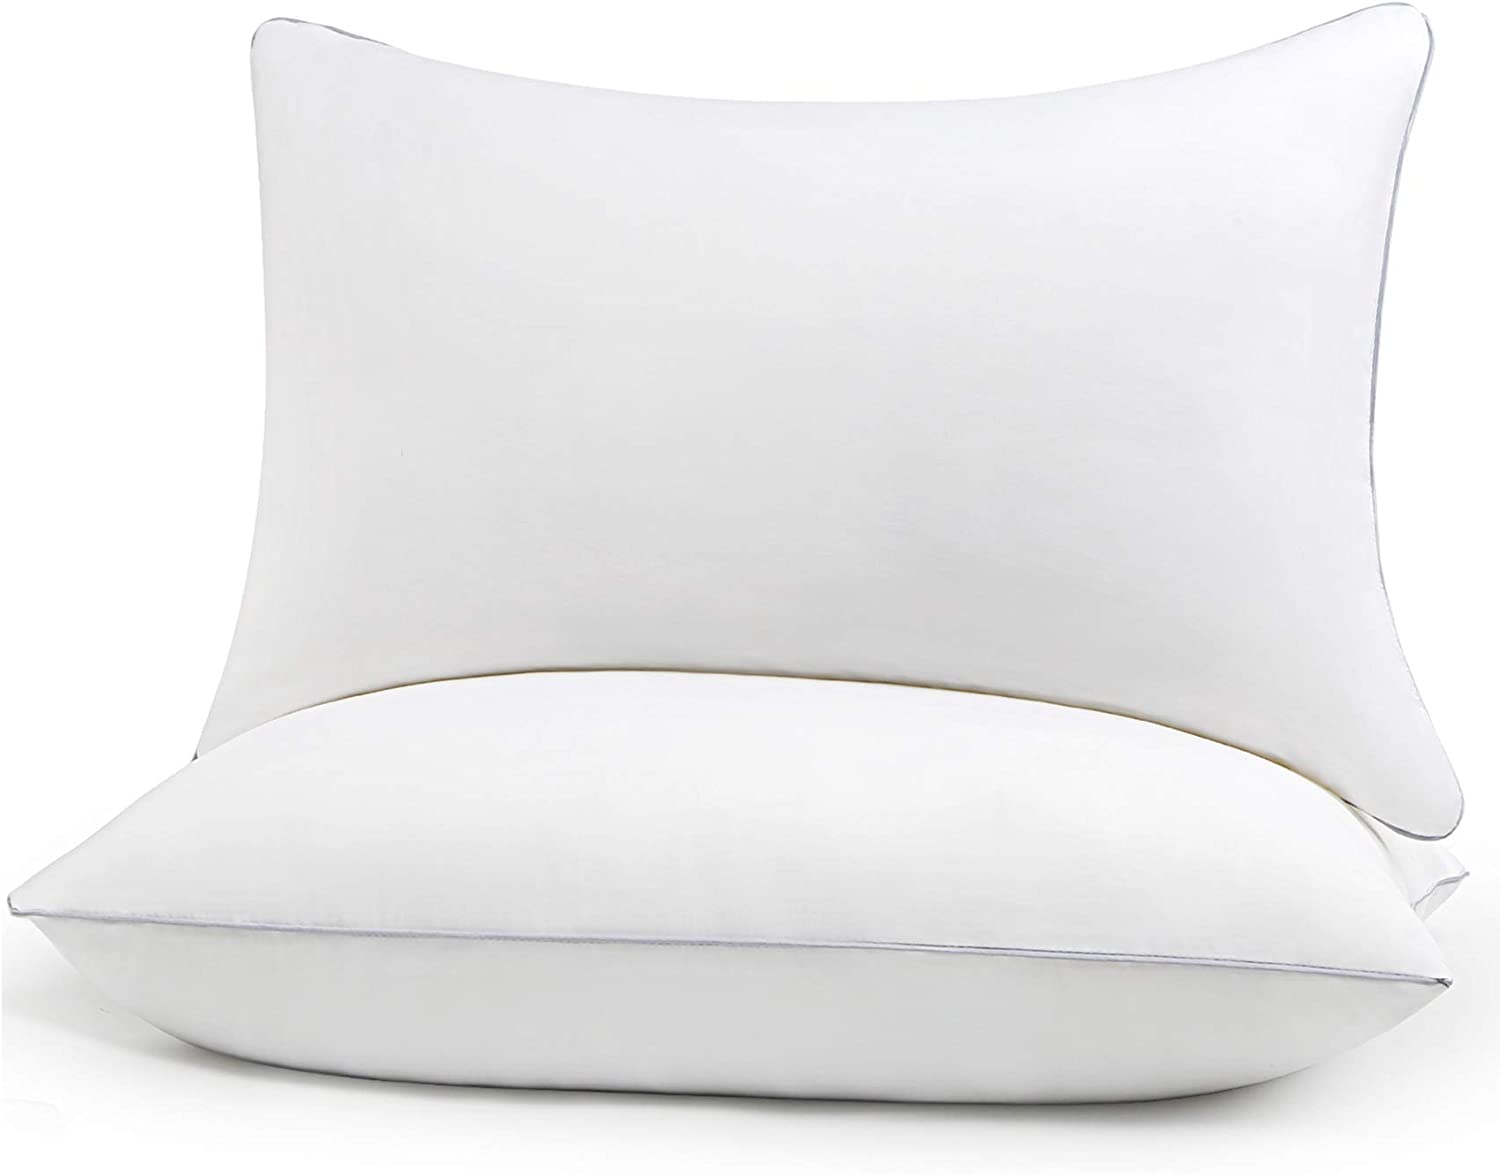 HIMOON GREENGUARD Cooling Pillows, 2-Pack